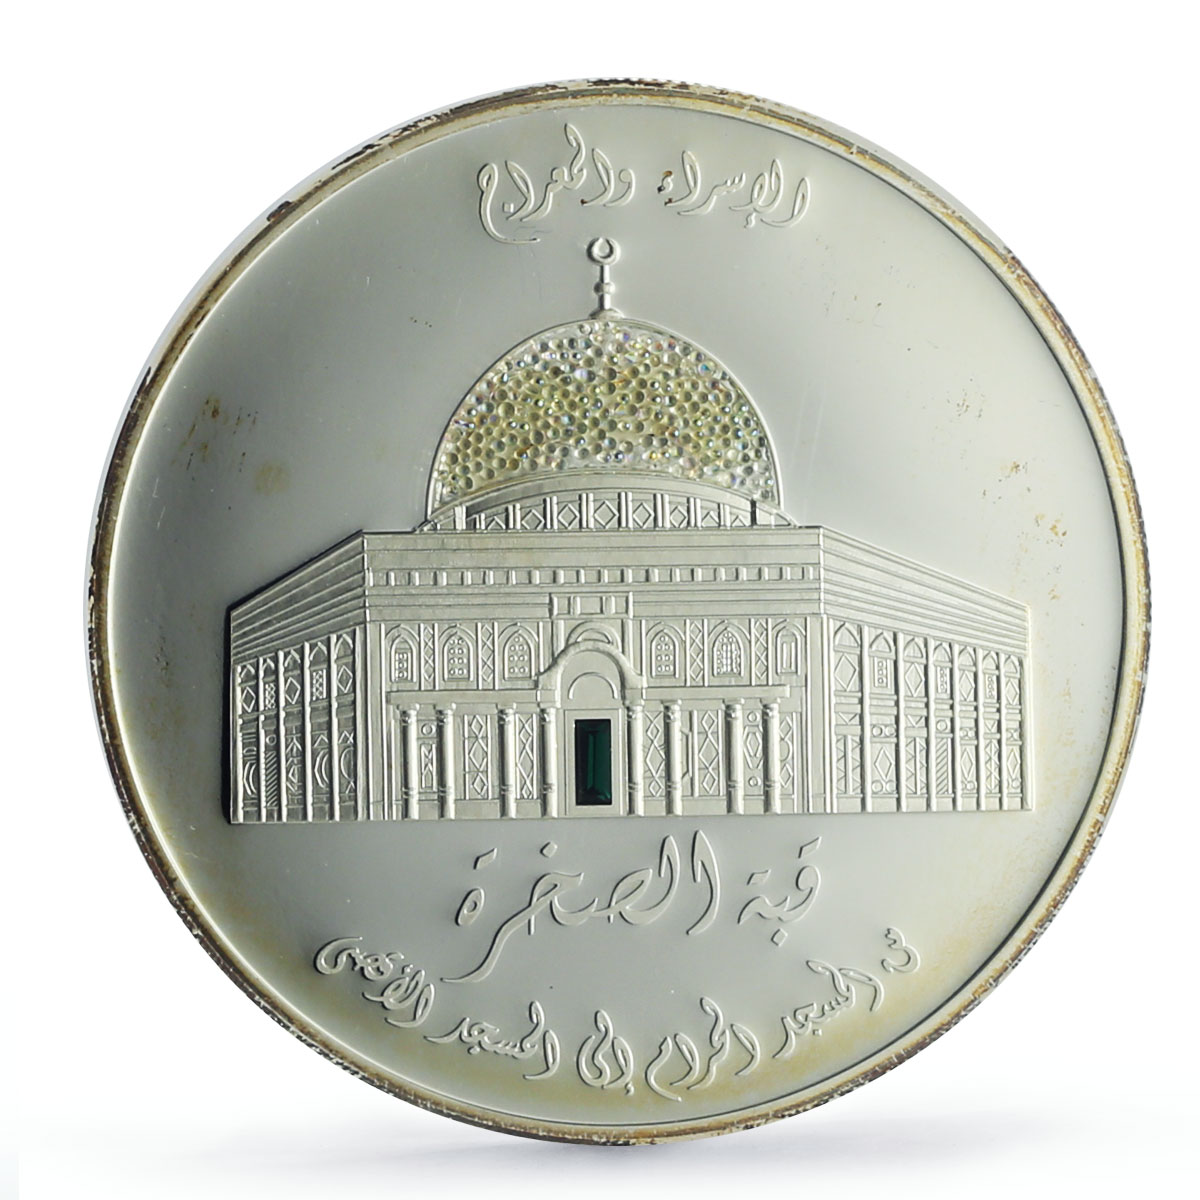 Somalia 20000 shillings Islam Landmarks Rock Dome Mosque PF69 NGC Ag coin 2005